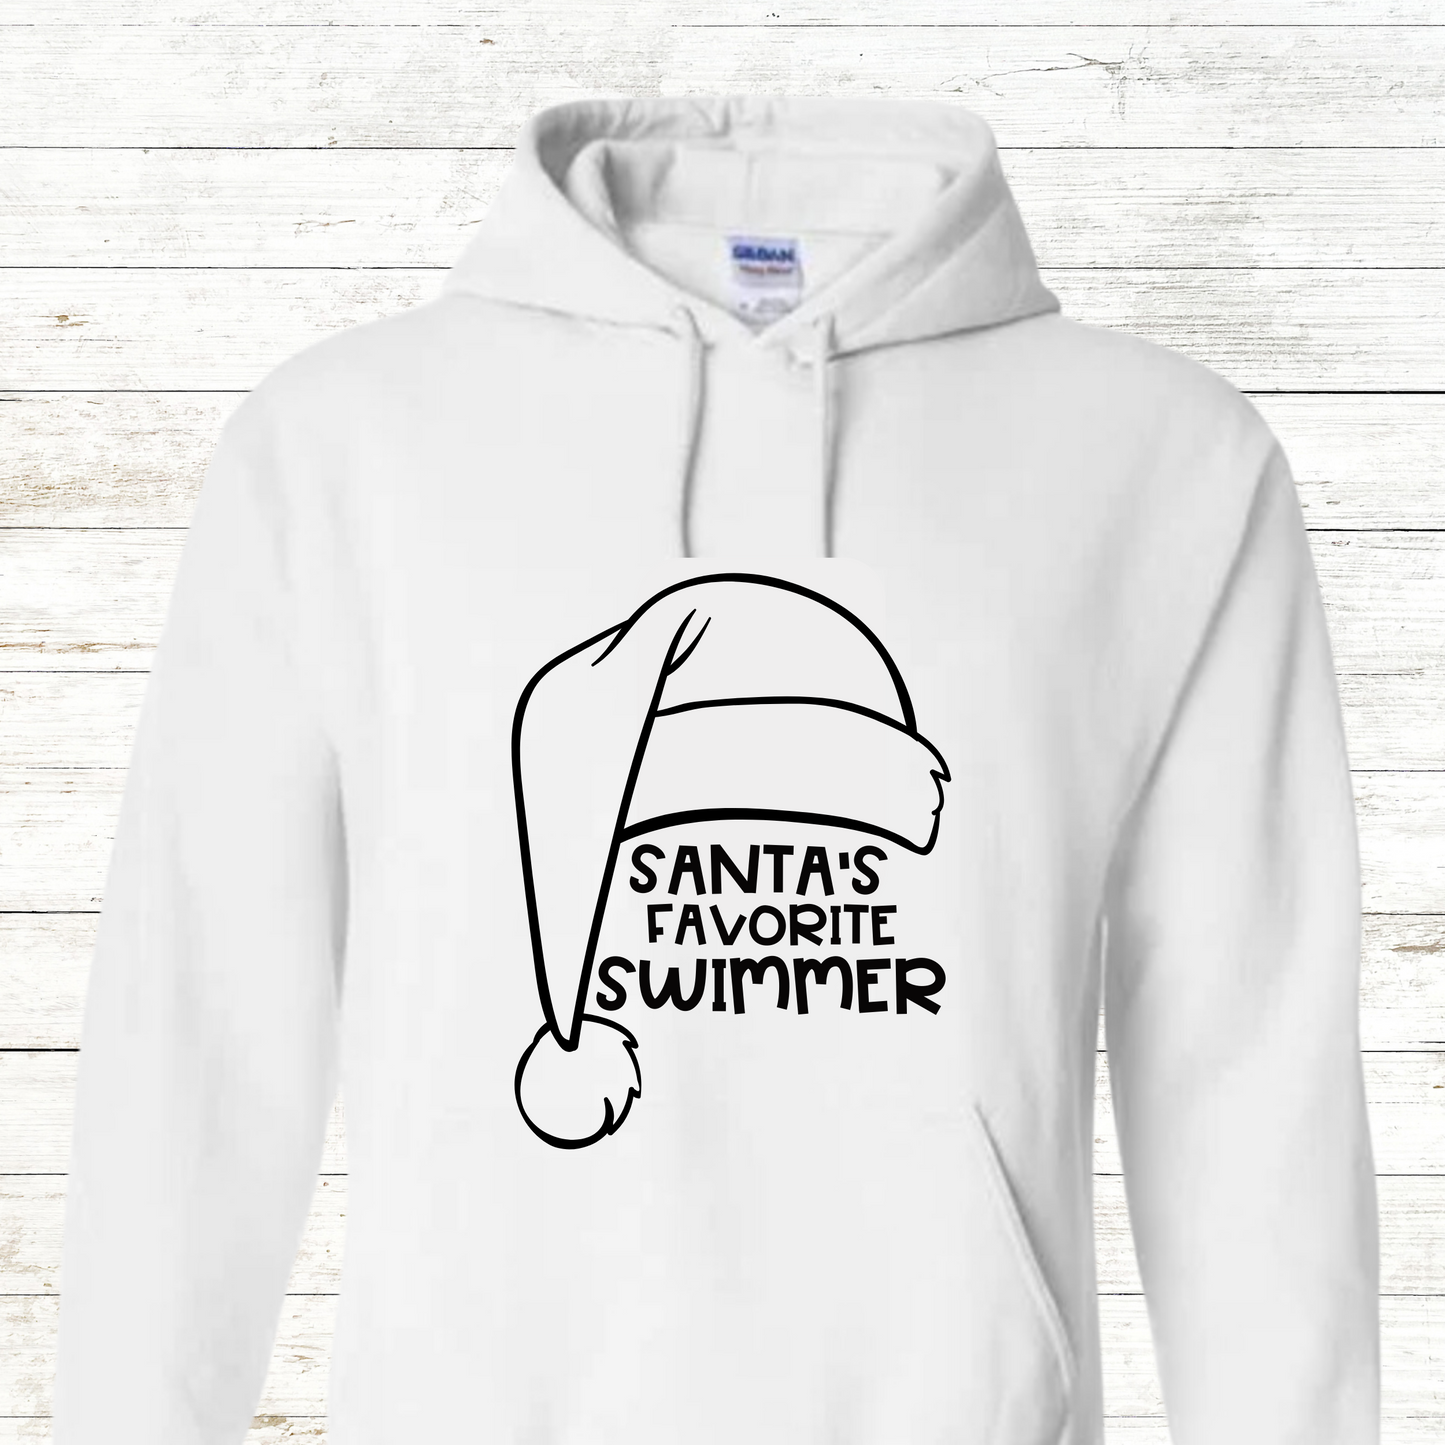 Santa's Favorite Swimmer - Adult Hooded Sweatshirt - Personalized on back option